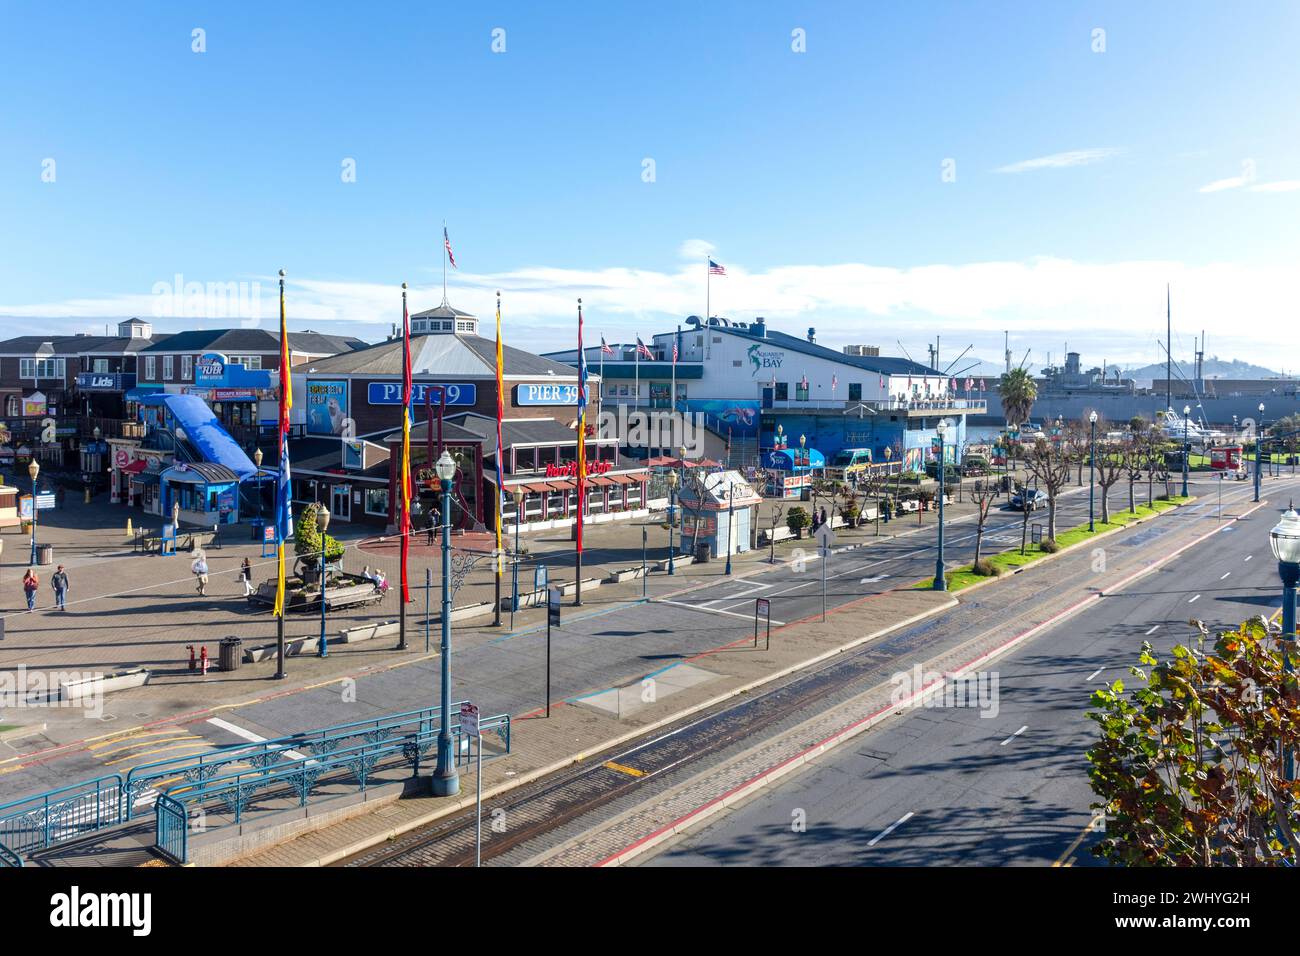 Entrance to Pier 39 across The Embarcadero, Fisherman's Wharf District, San Francisco, California, United States Stock Photo